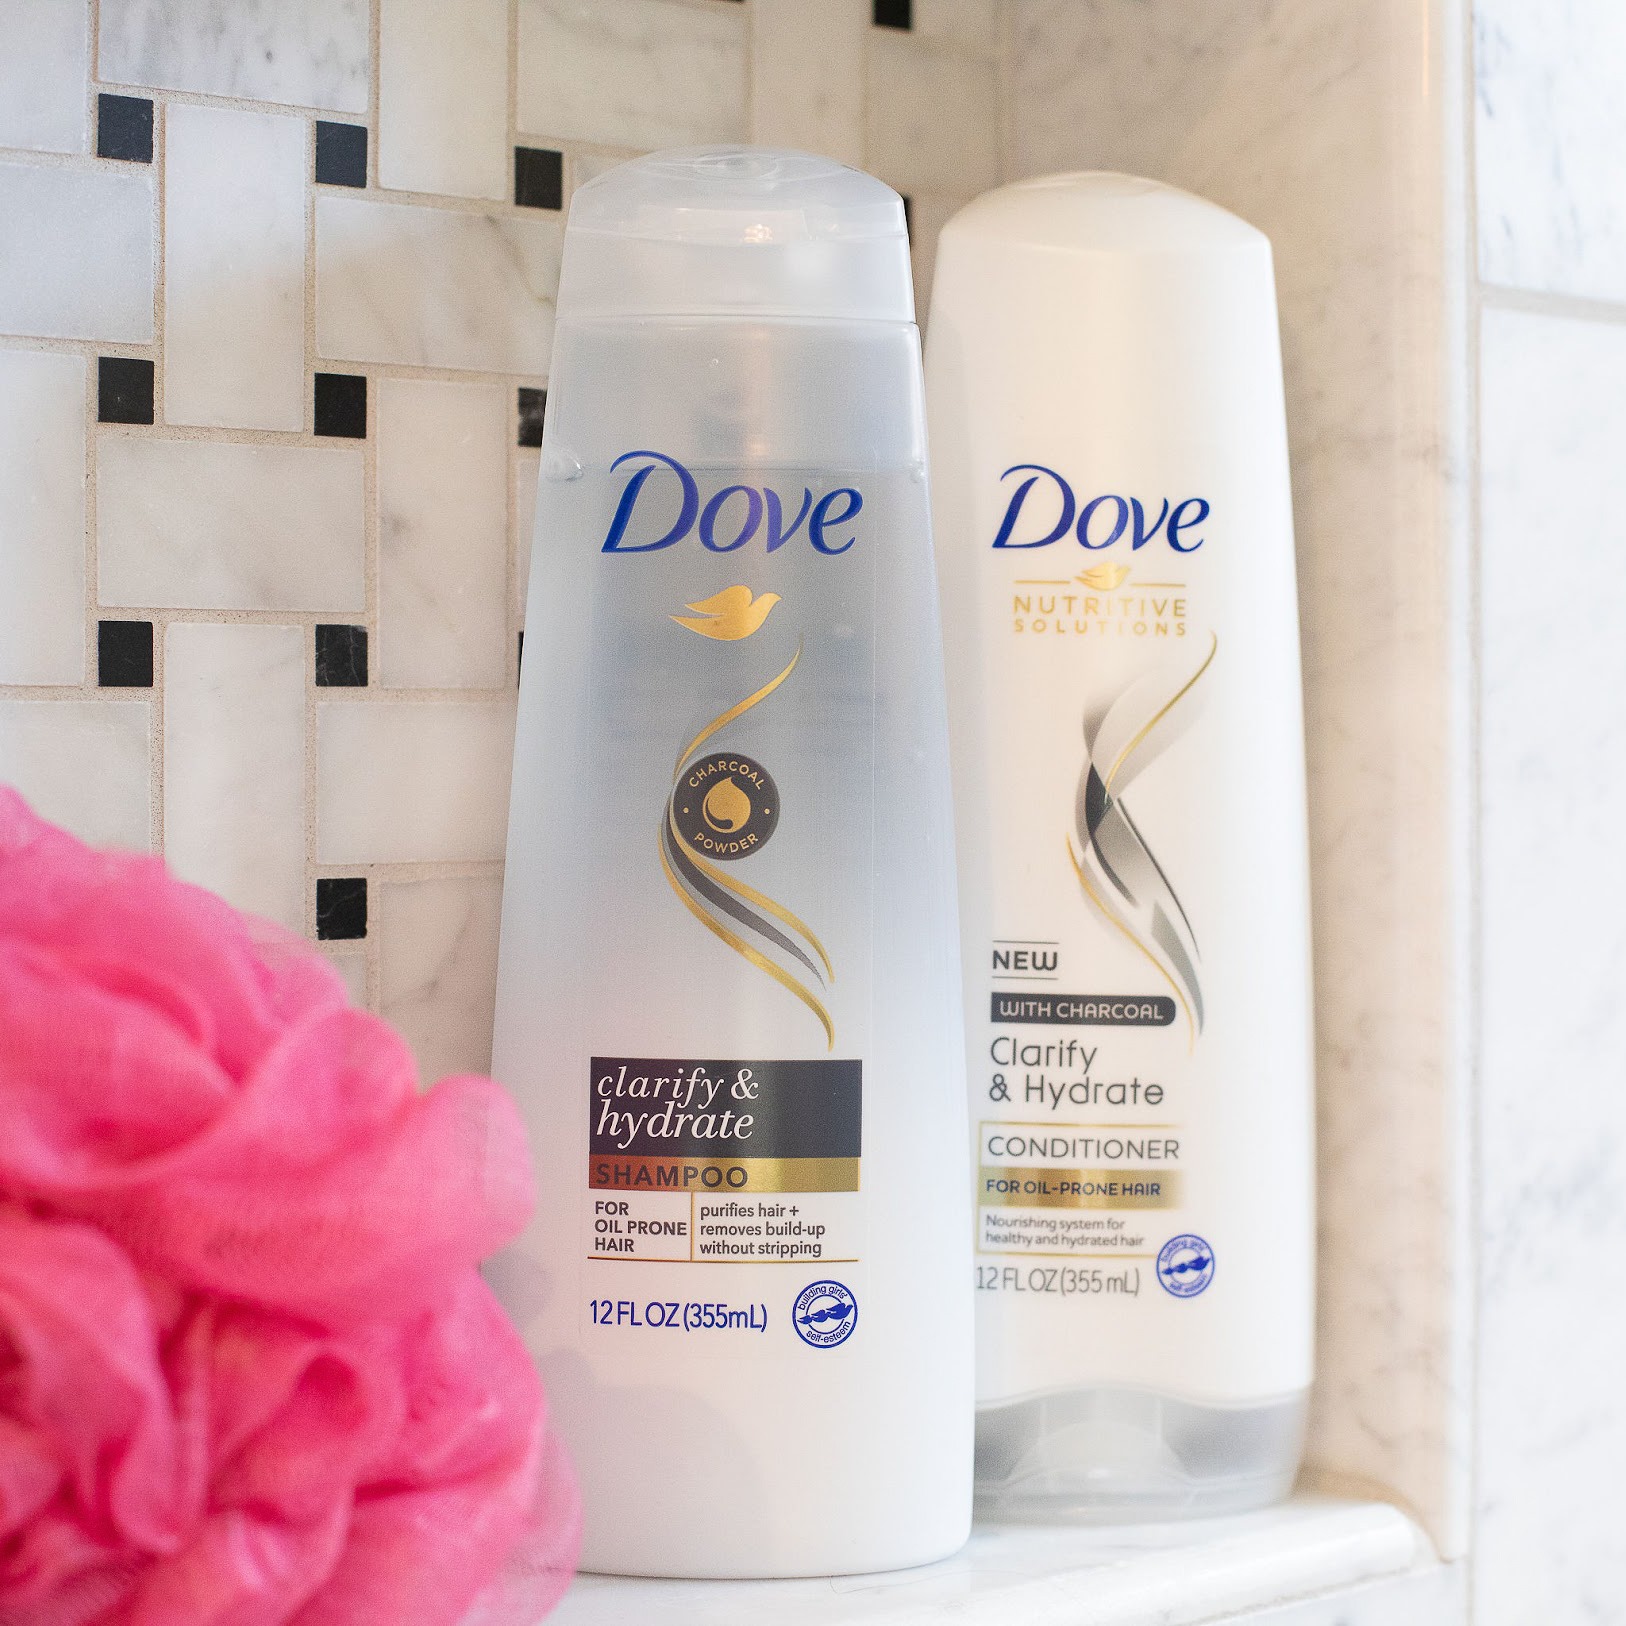 Dove Hair Care As Low As $1.32 At Kroger (Regular Price $4.49)